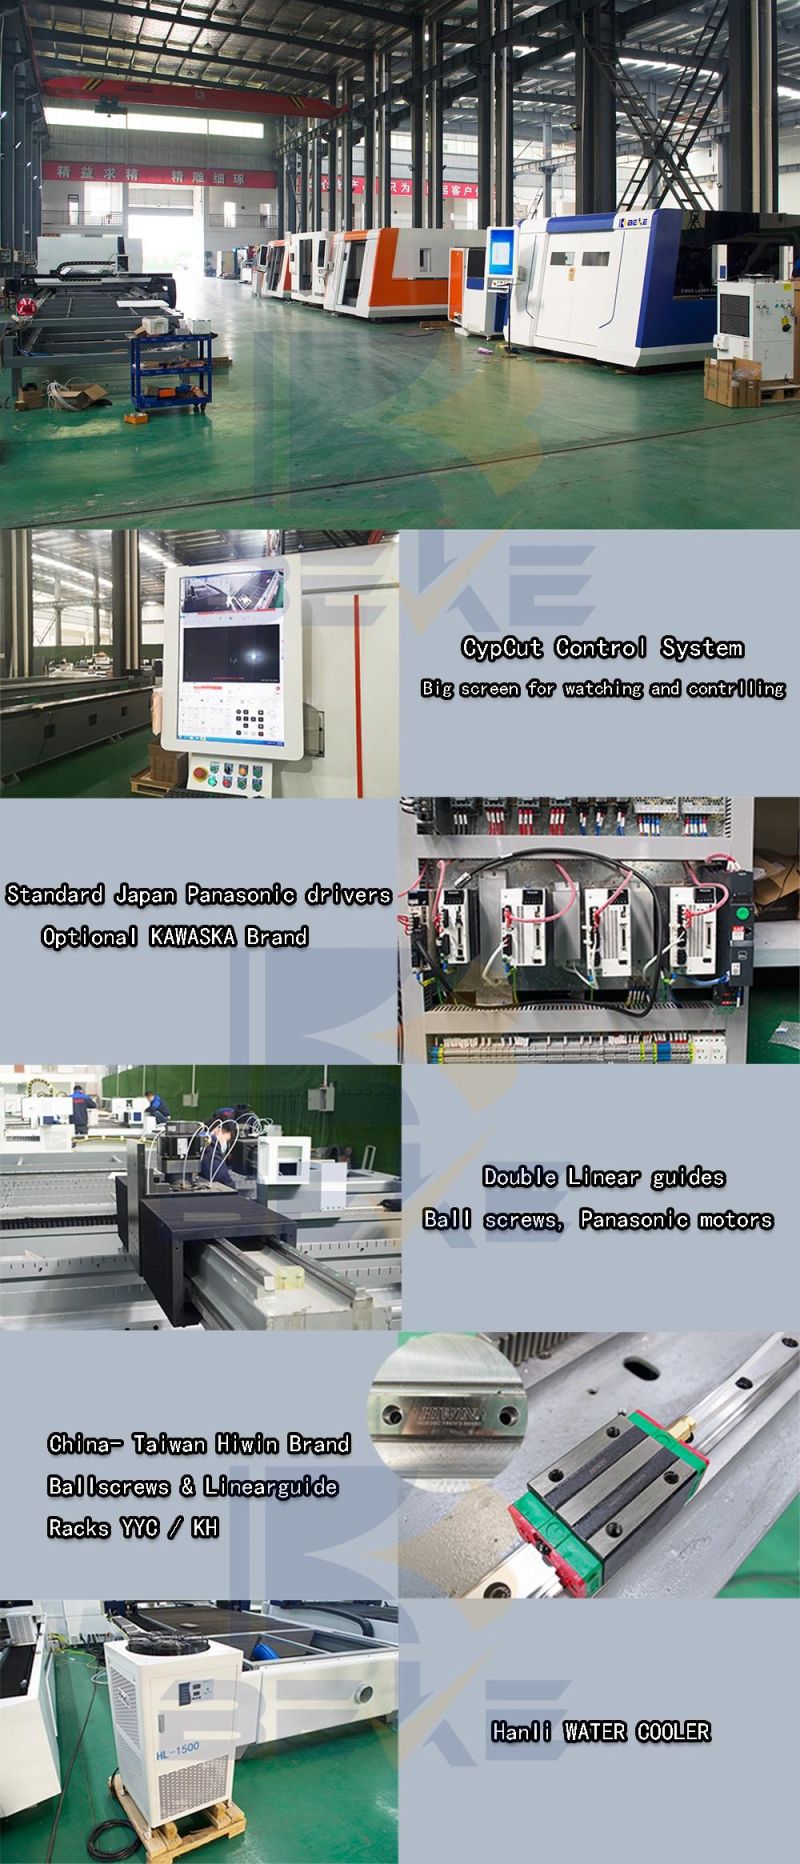 Nanjing Beke Best Selling 1500W Exchange Working Table Carbon Plate CNC Fiber Laser Cutting Machine